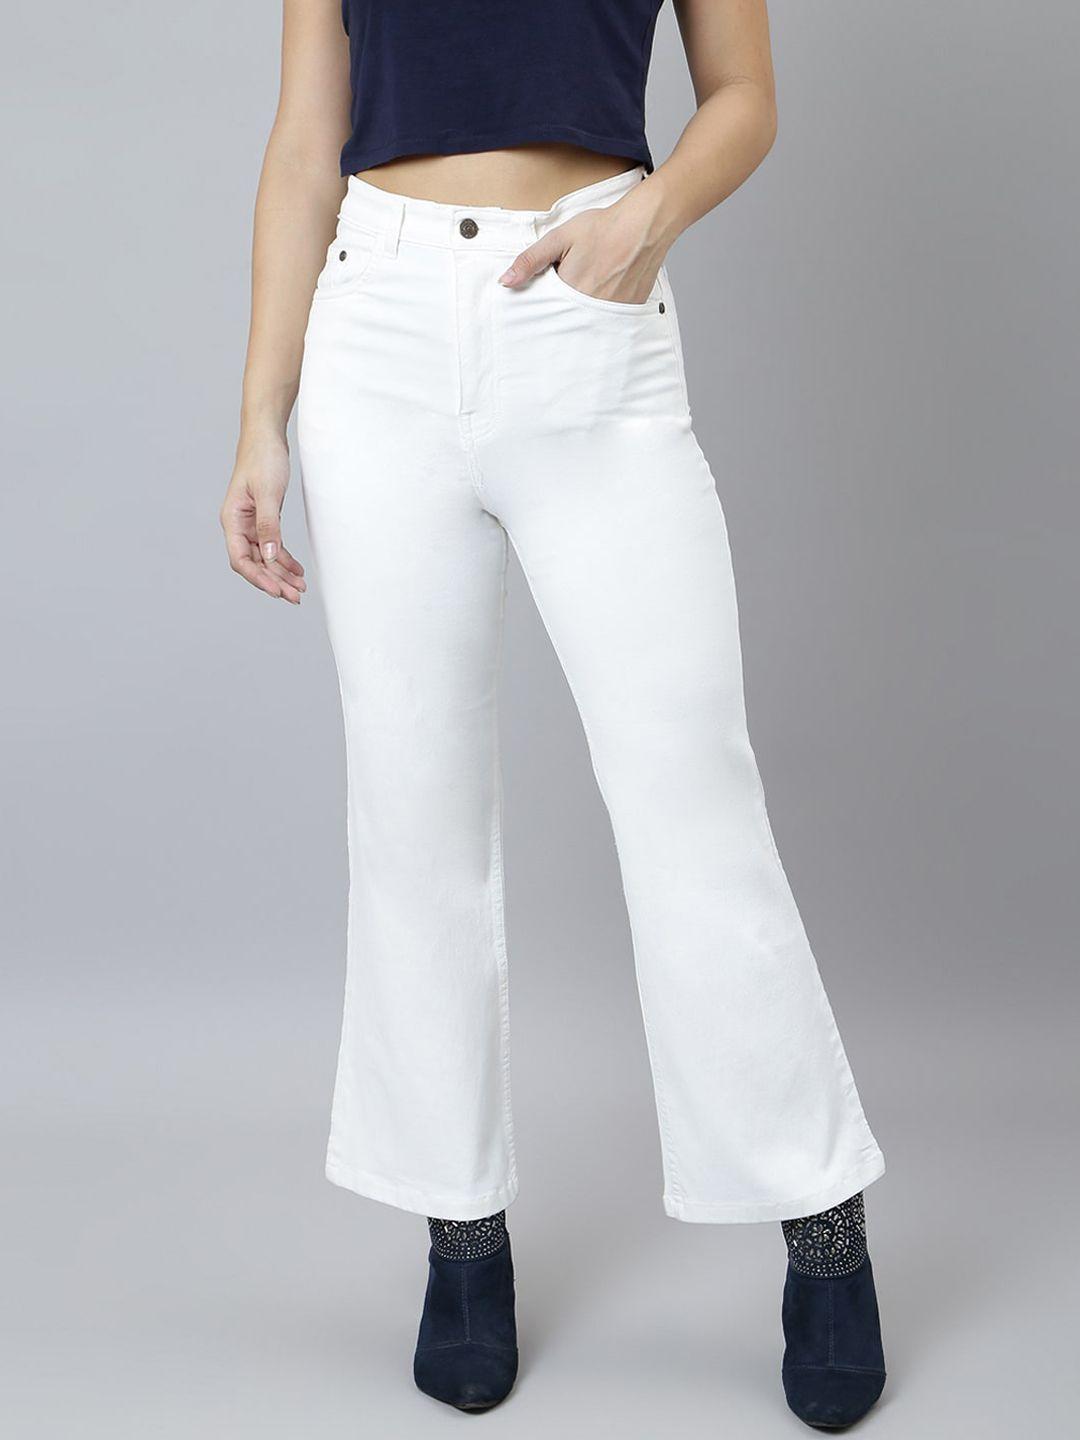 guti-women-bootcut-high-rise-stretchable-jeans